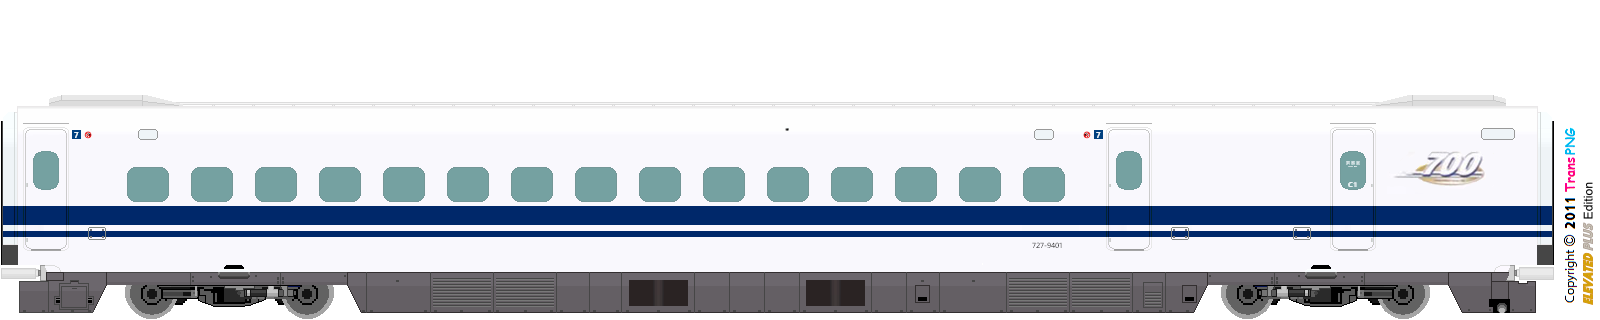 9013 - [9013] Central Japan Railway 52287585588_b70150c741_o